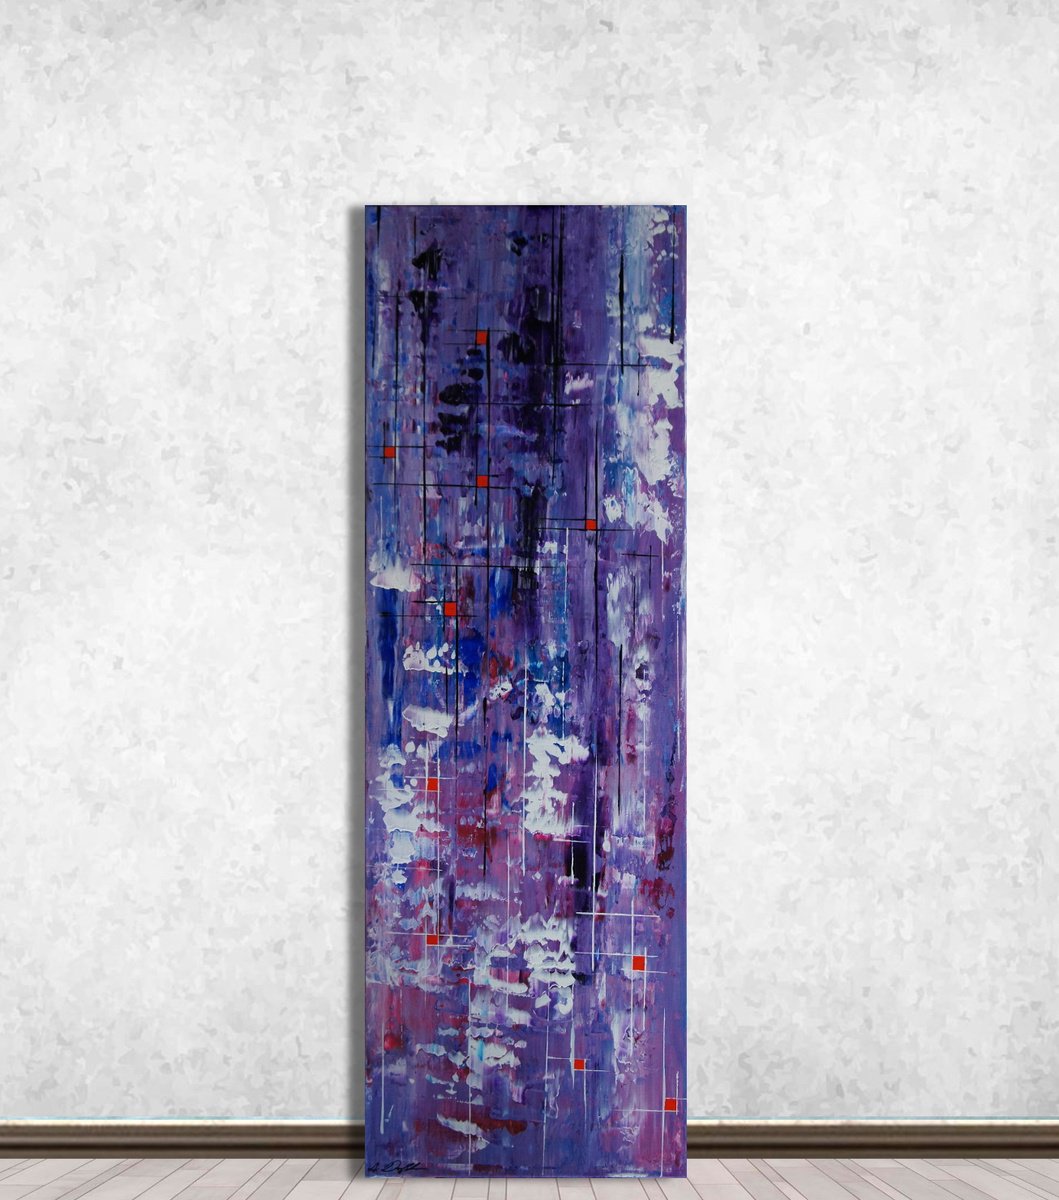 Day ’n’ Dawn (40 x 120 cm) (16 x 48 inches) XL vertical by Ansgar Dressler